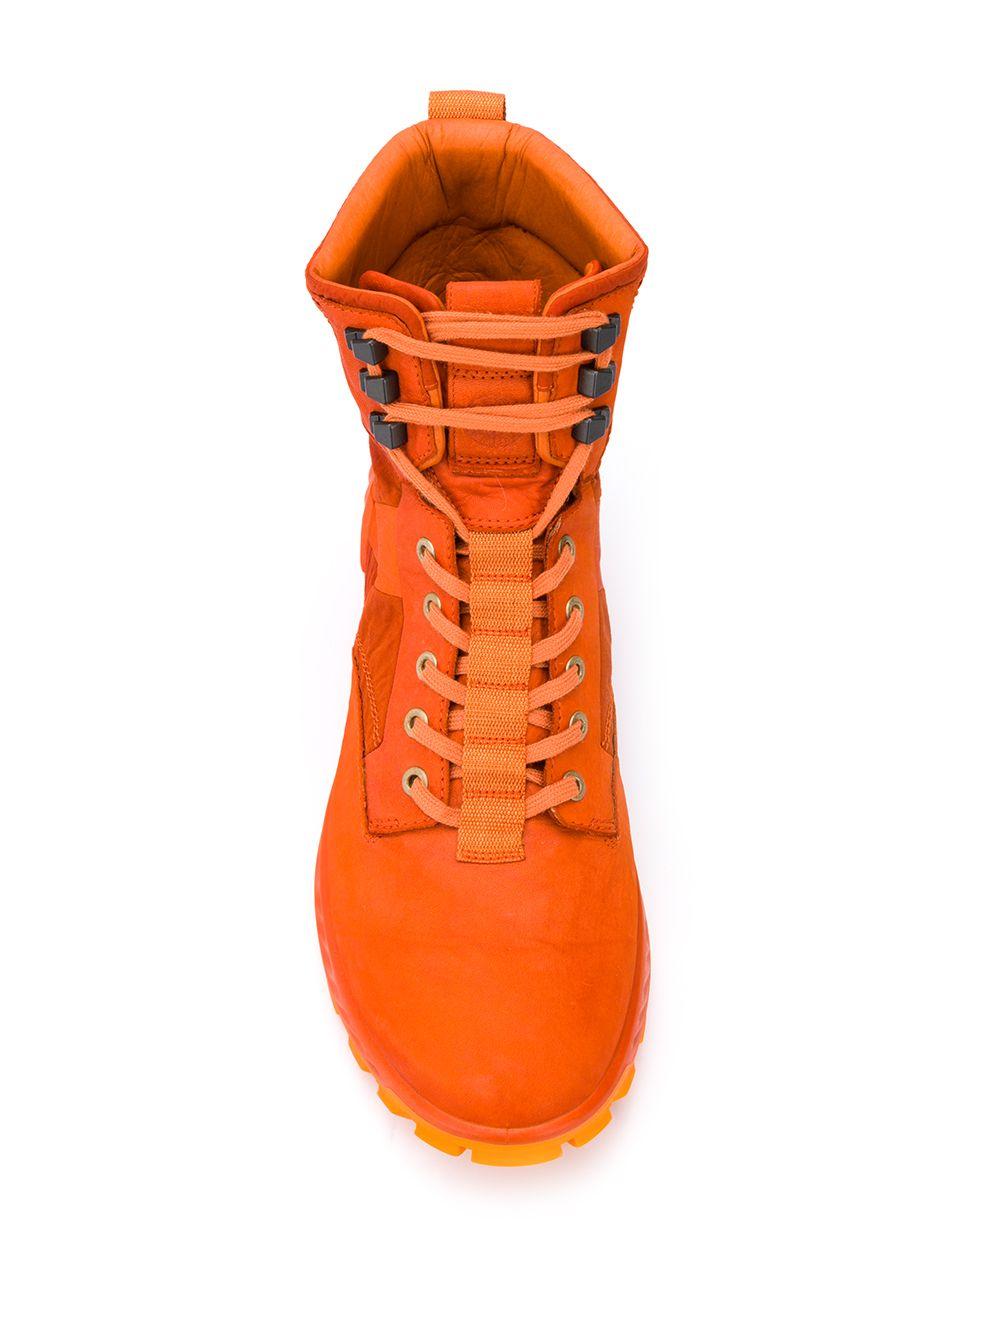 Stone Island Exostrike Boots in Orange for Men | Lyst